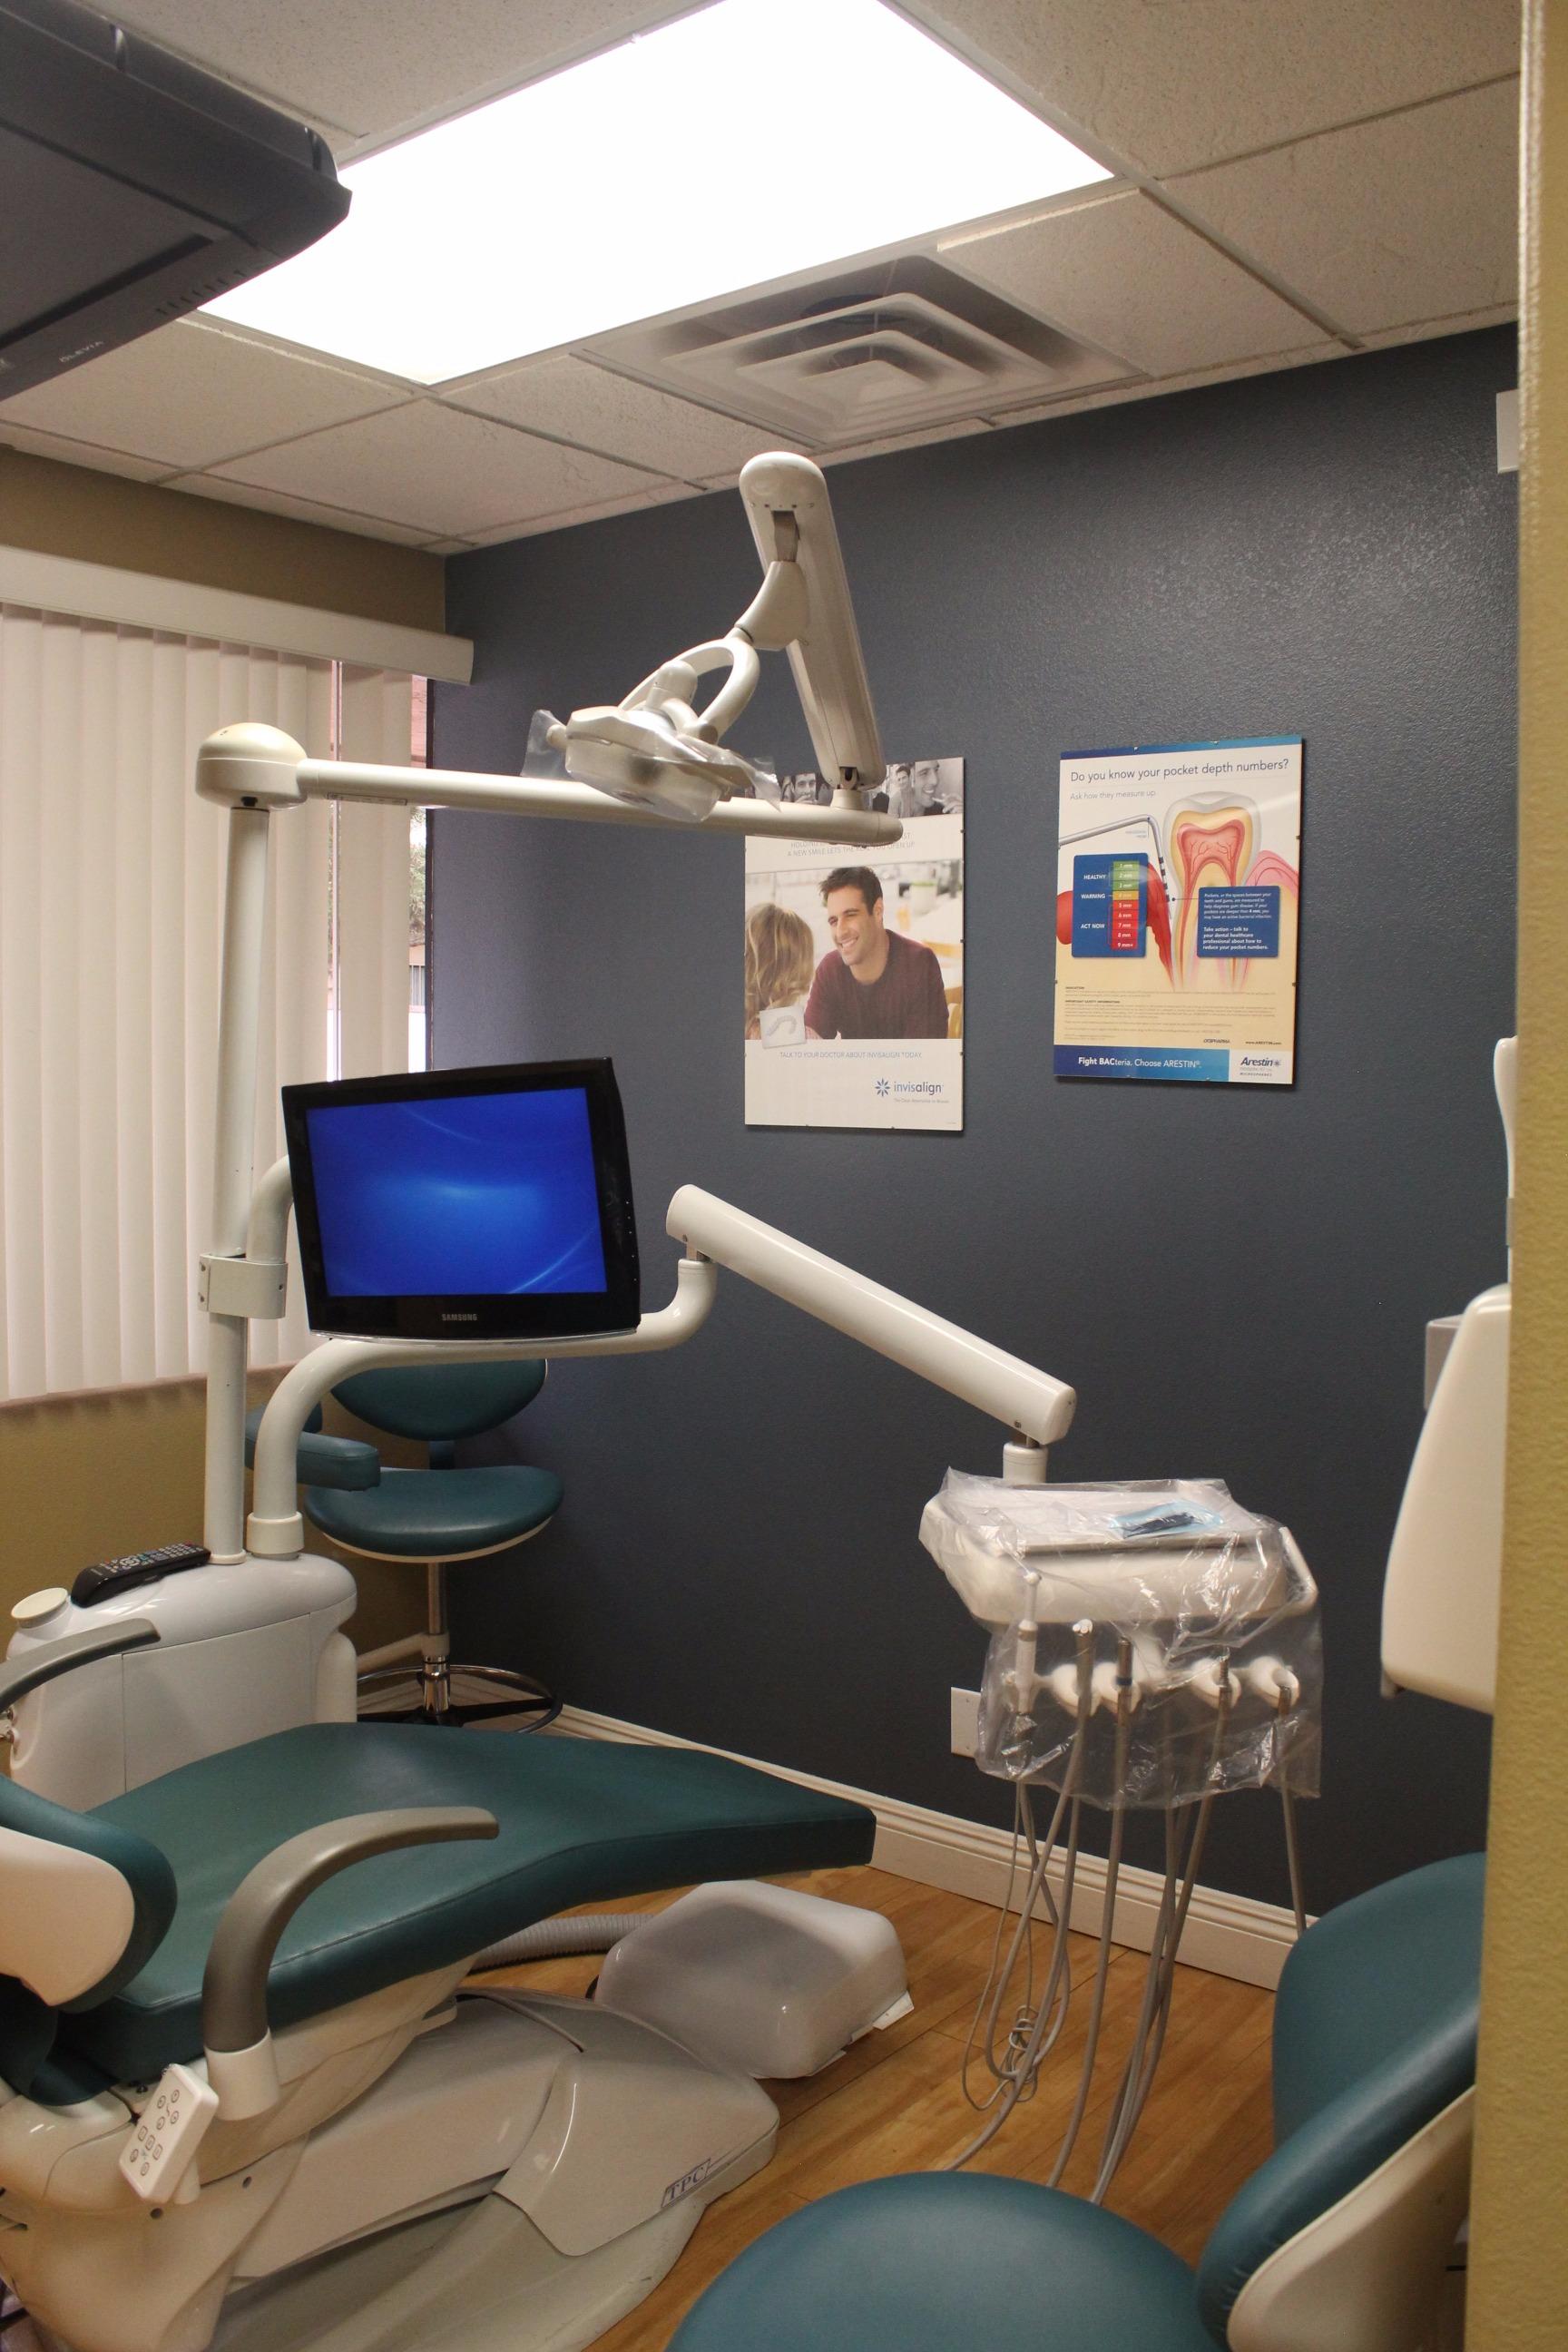 Access Health Dental - Sunset Dental Photo